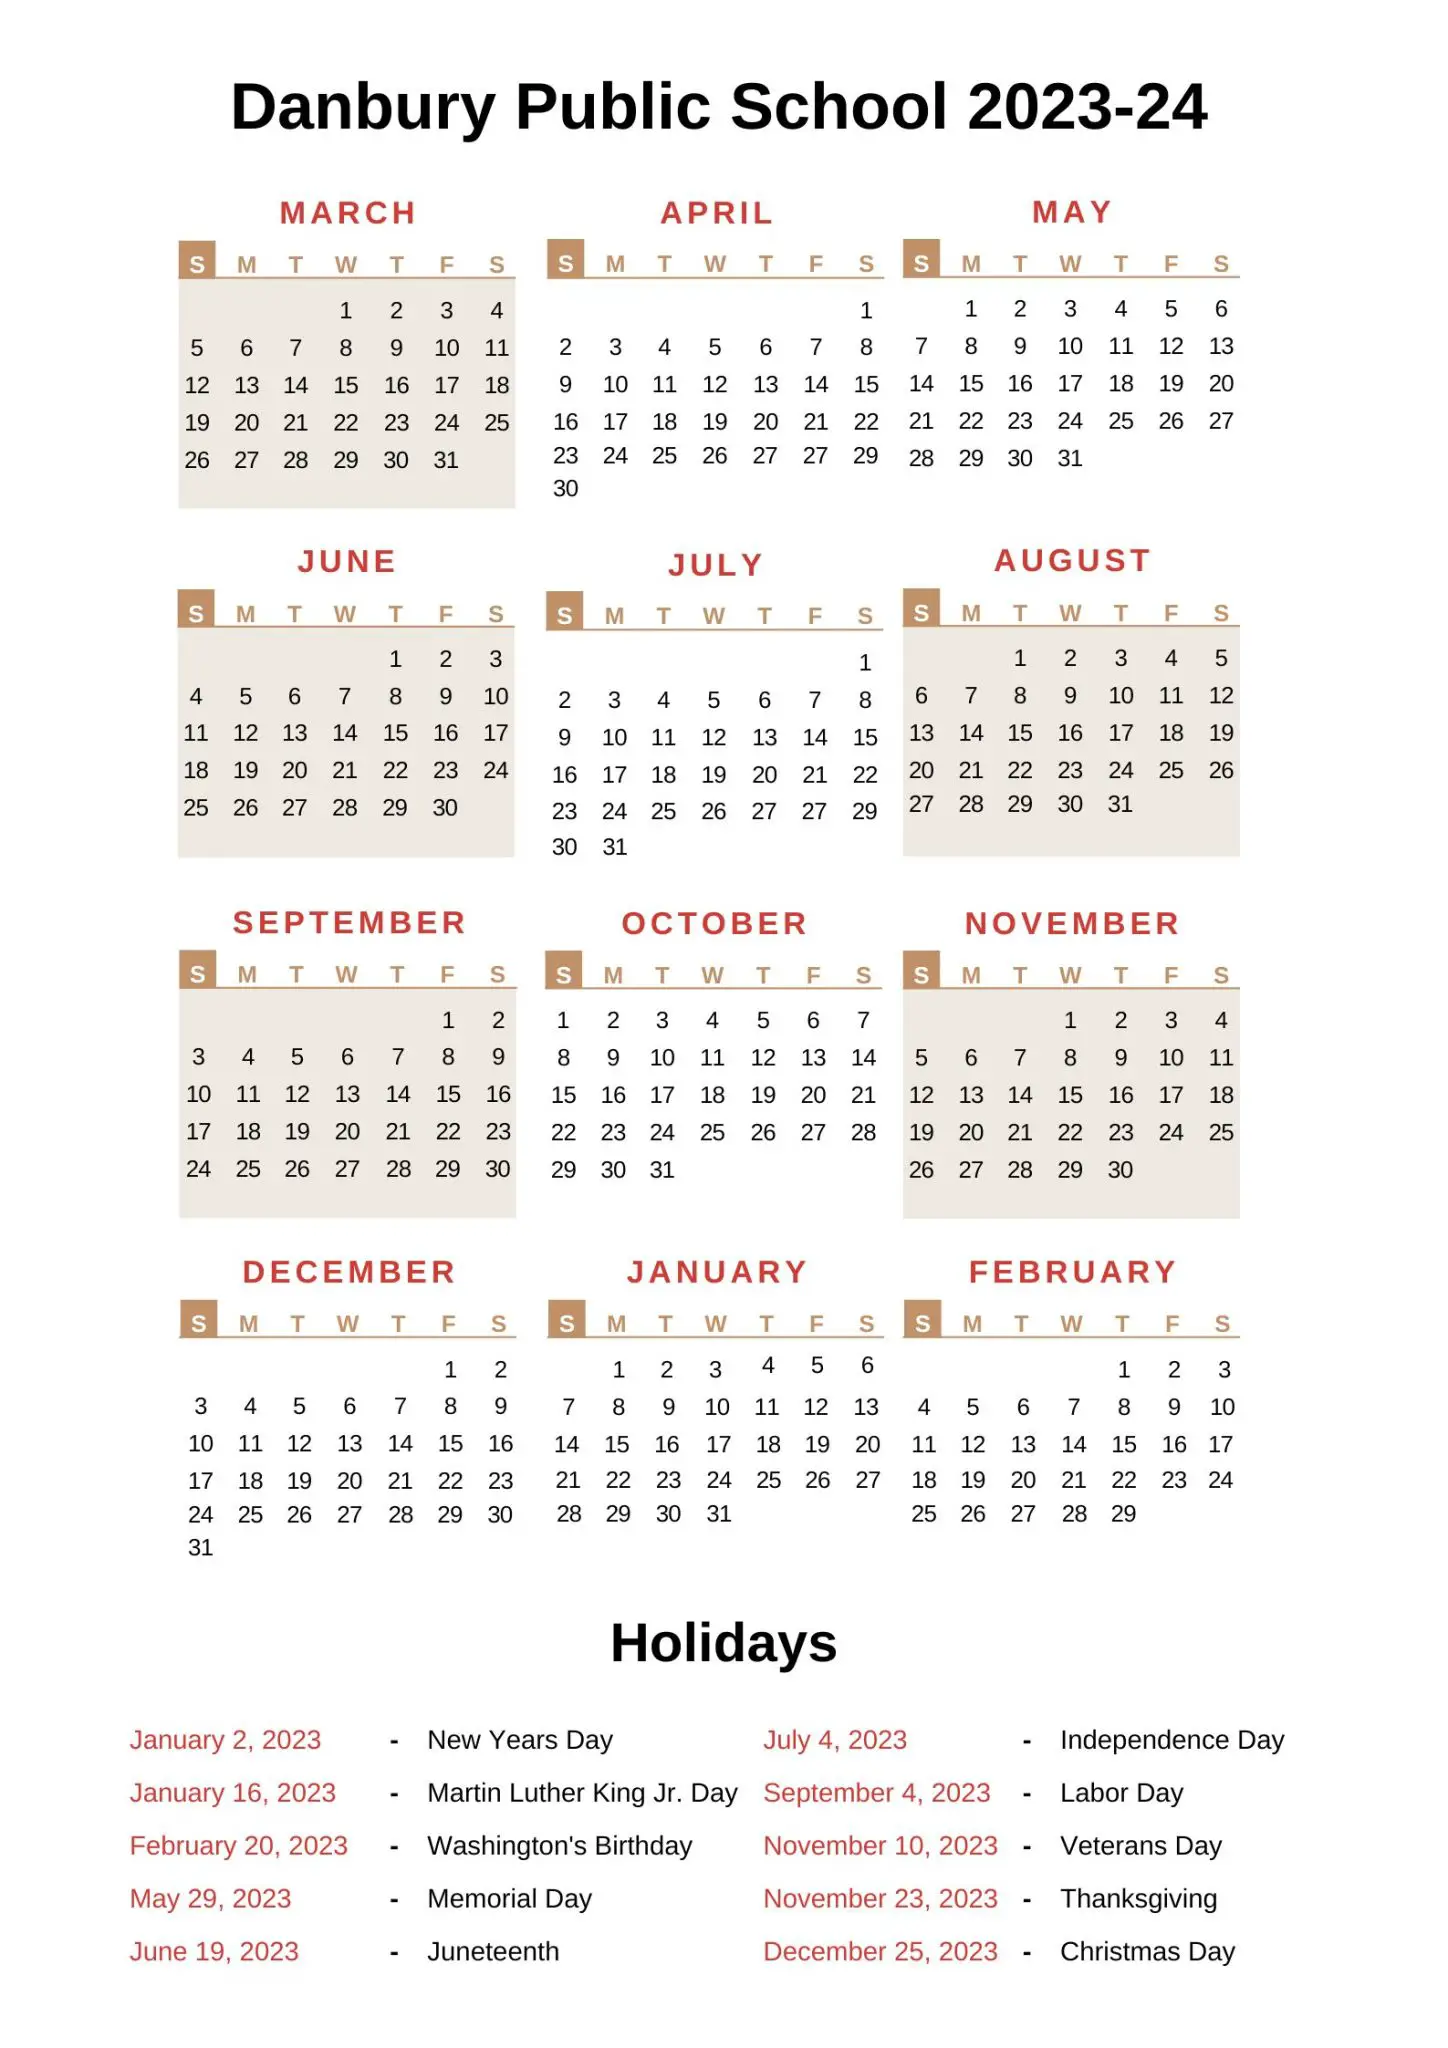 Danbury Public Schools Calendar 2025